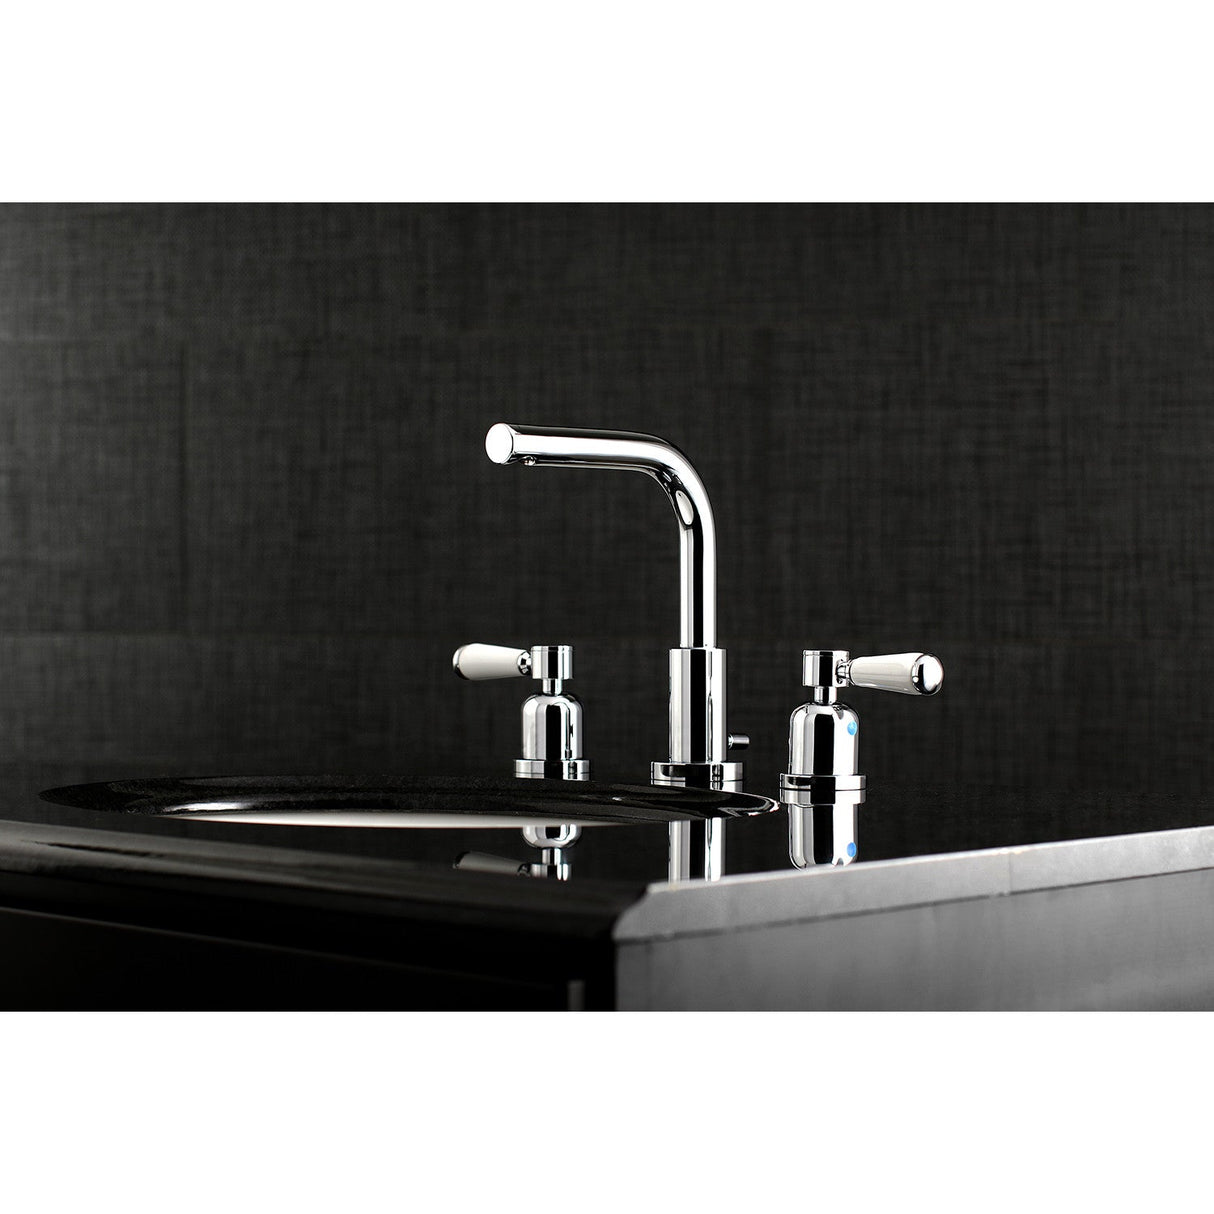 Paris FSC8951DPL Two-Handle 3-Hole Deck Mount Widespread Bathroom Faucet with Pop-Up Drain, Polished Chrome